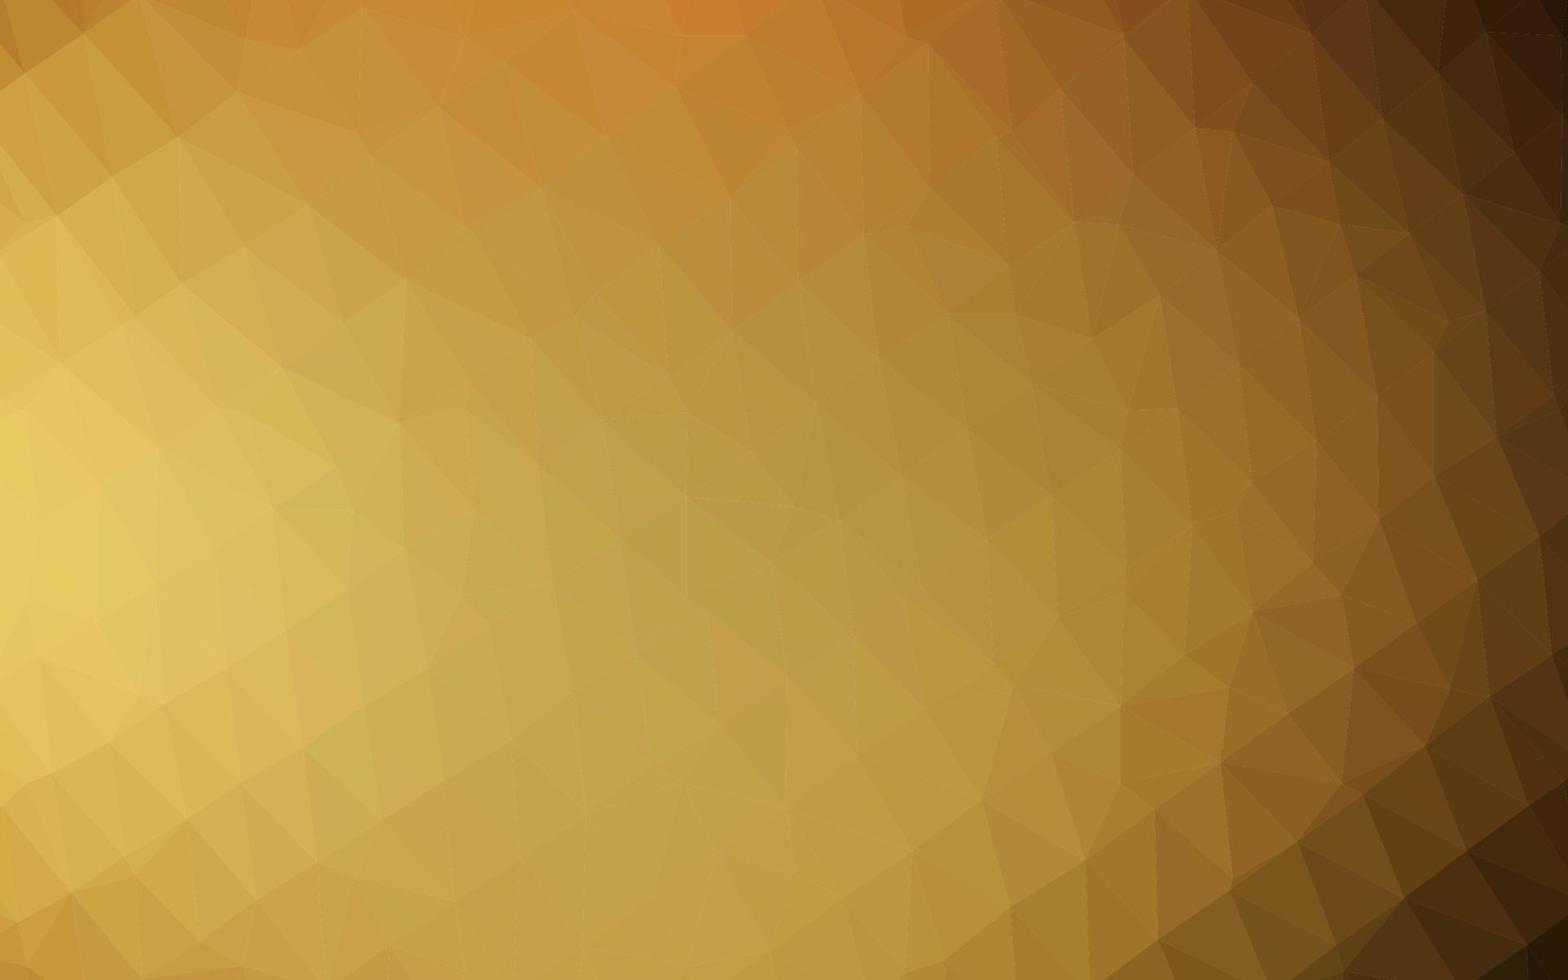 dunkelgelbe, orangefarbene Vektorverschwommene Dreiecksvorlage. vektor